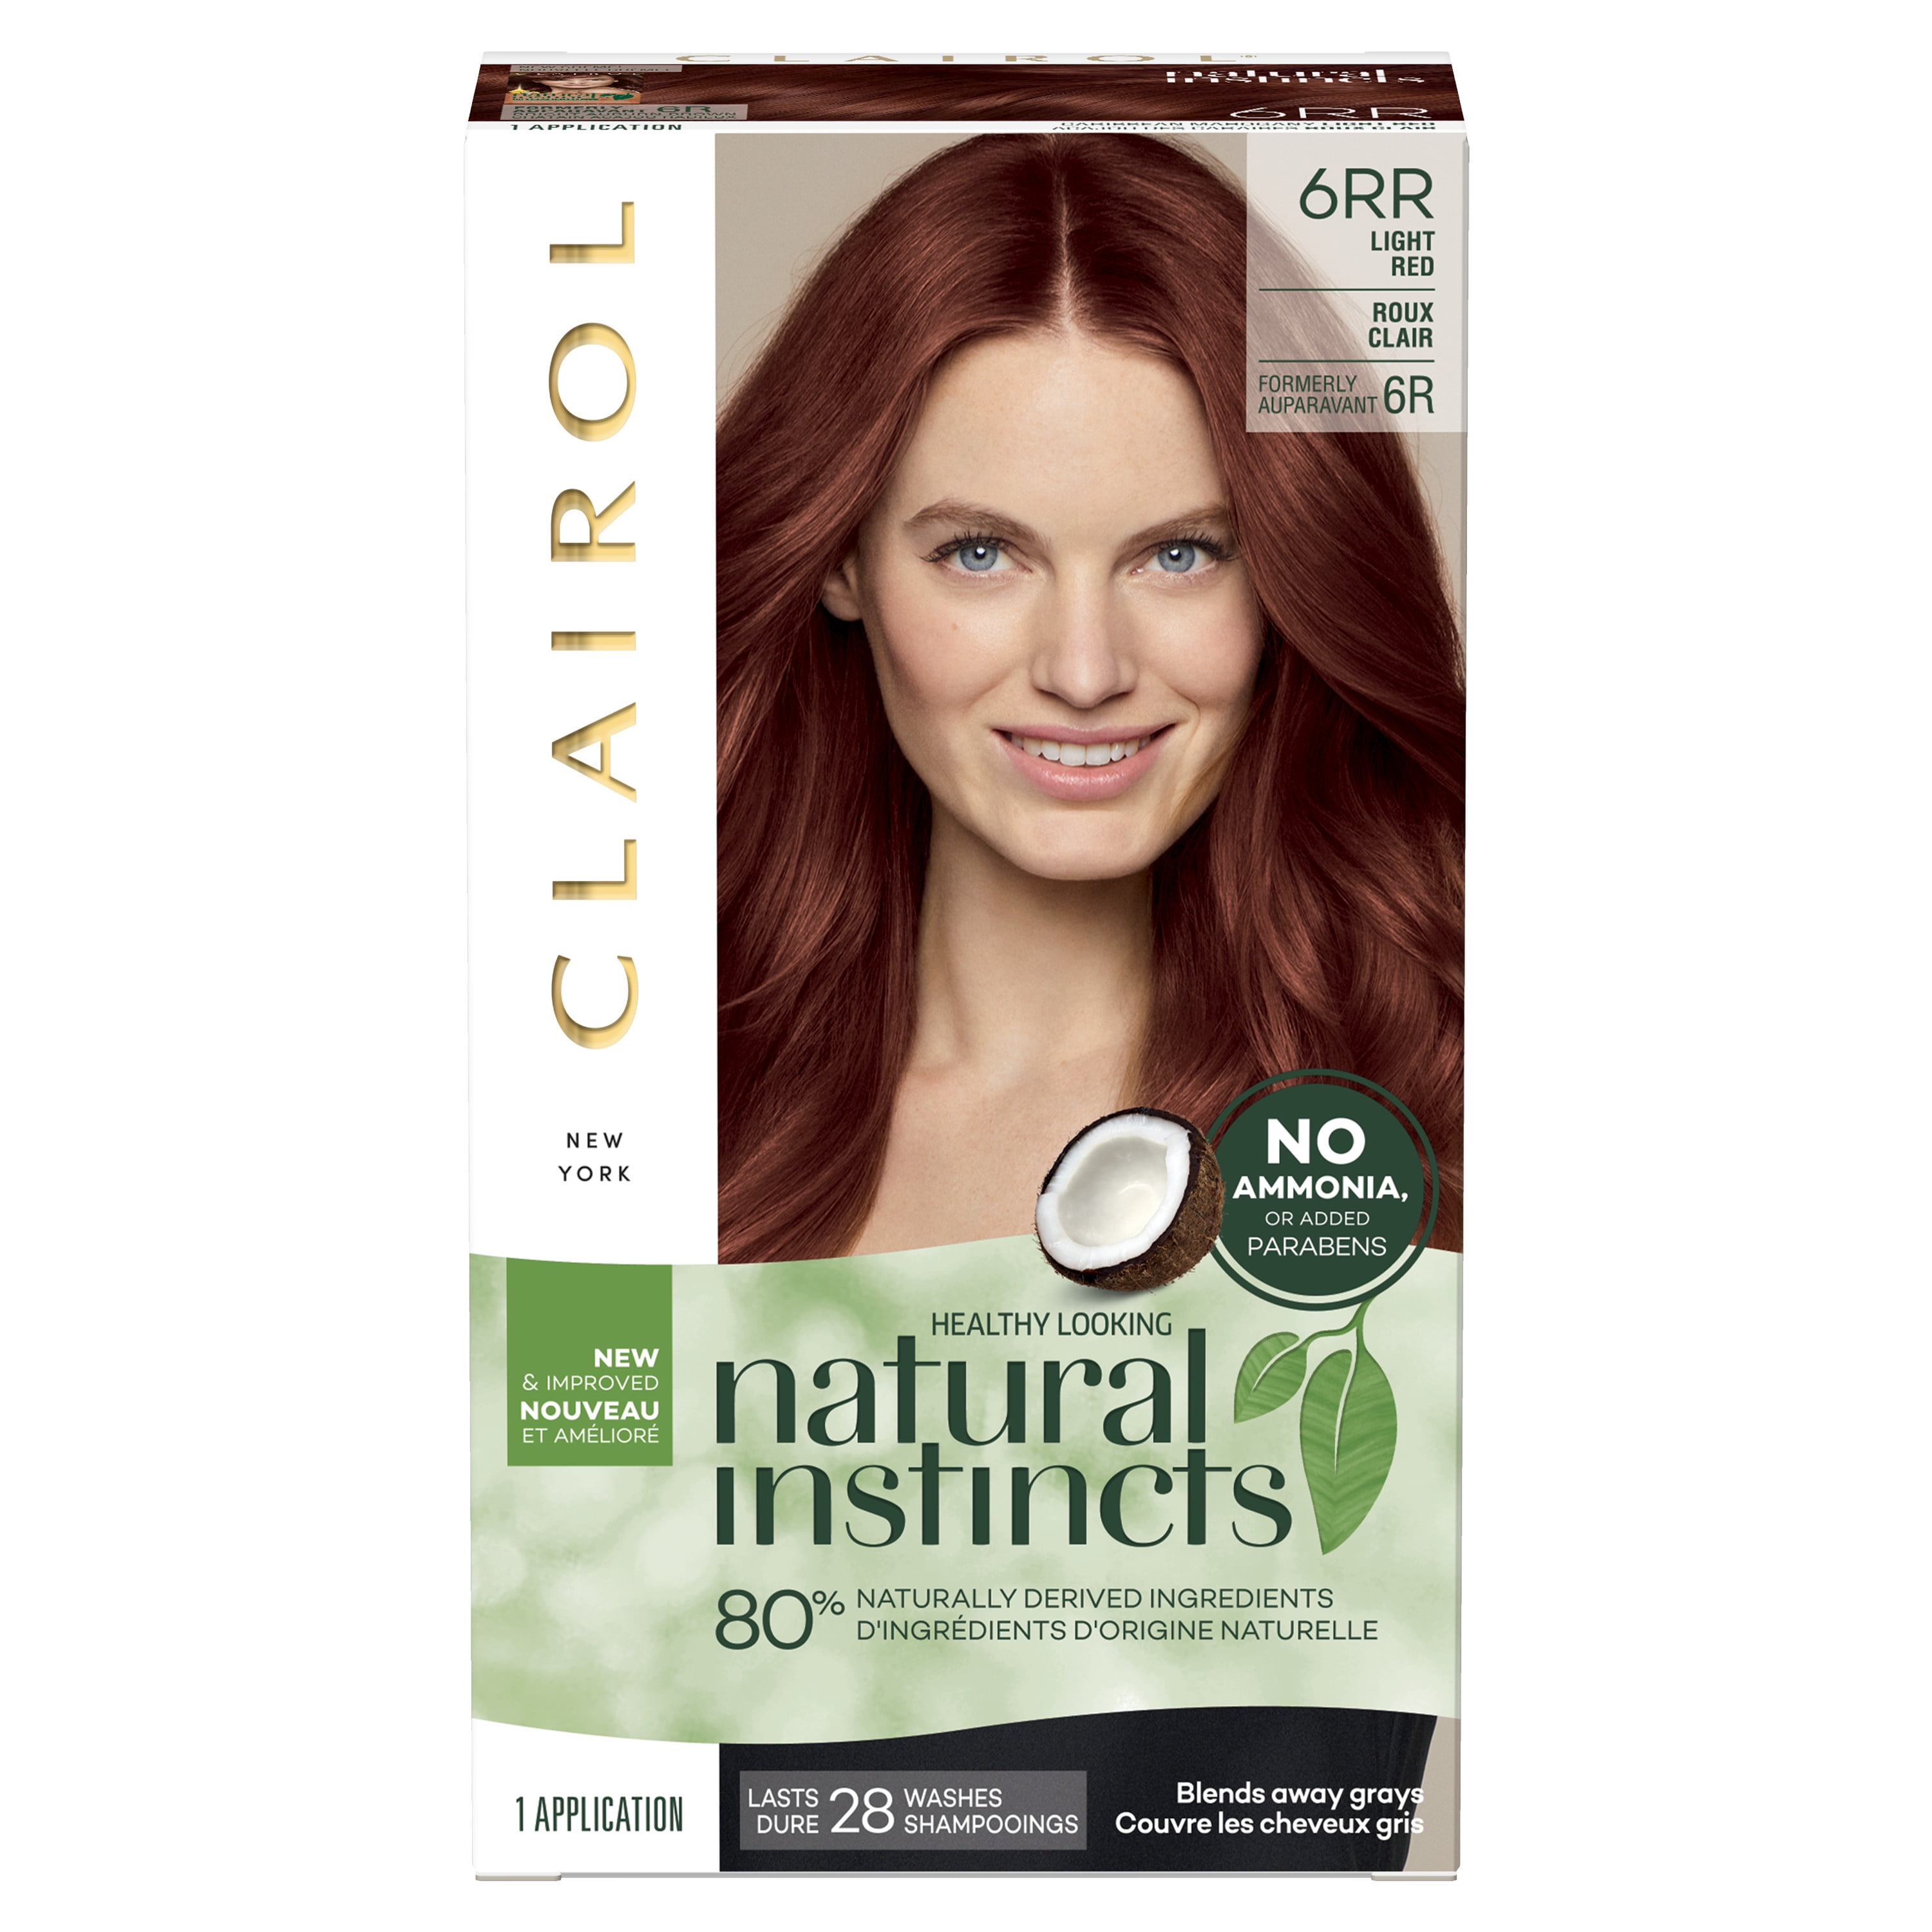 Clairol Natural Instincts Demi-Permanent Hair Color Creme, 6RR Light Red, Hair Dye, 1 Application Walmart.com